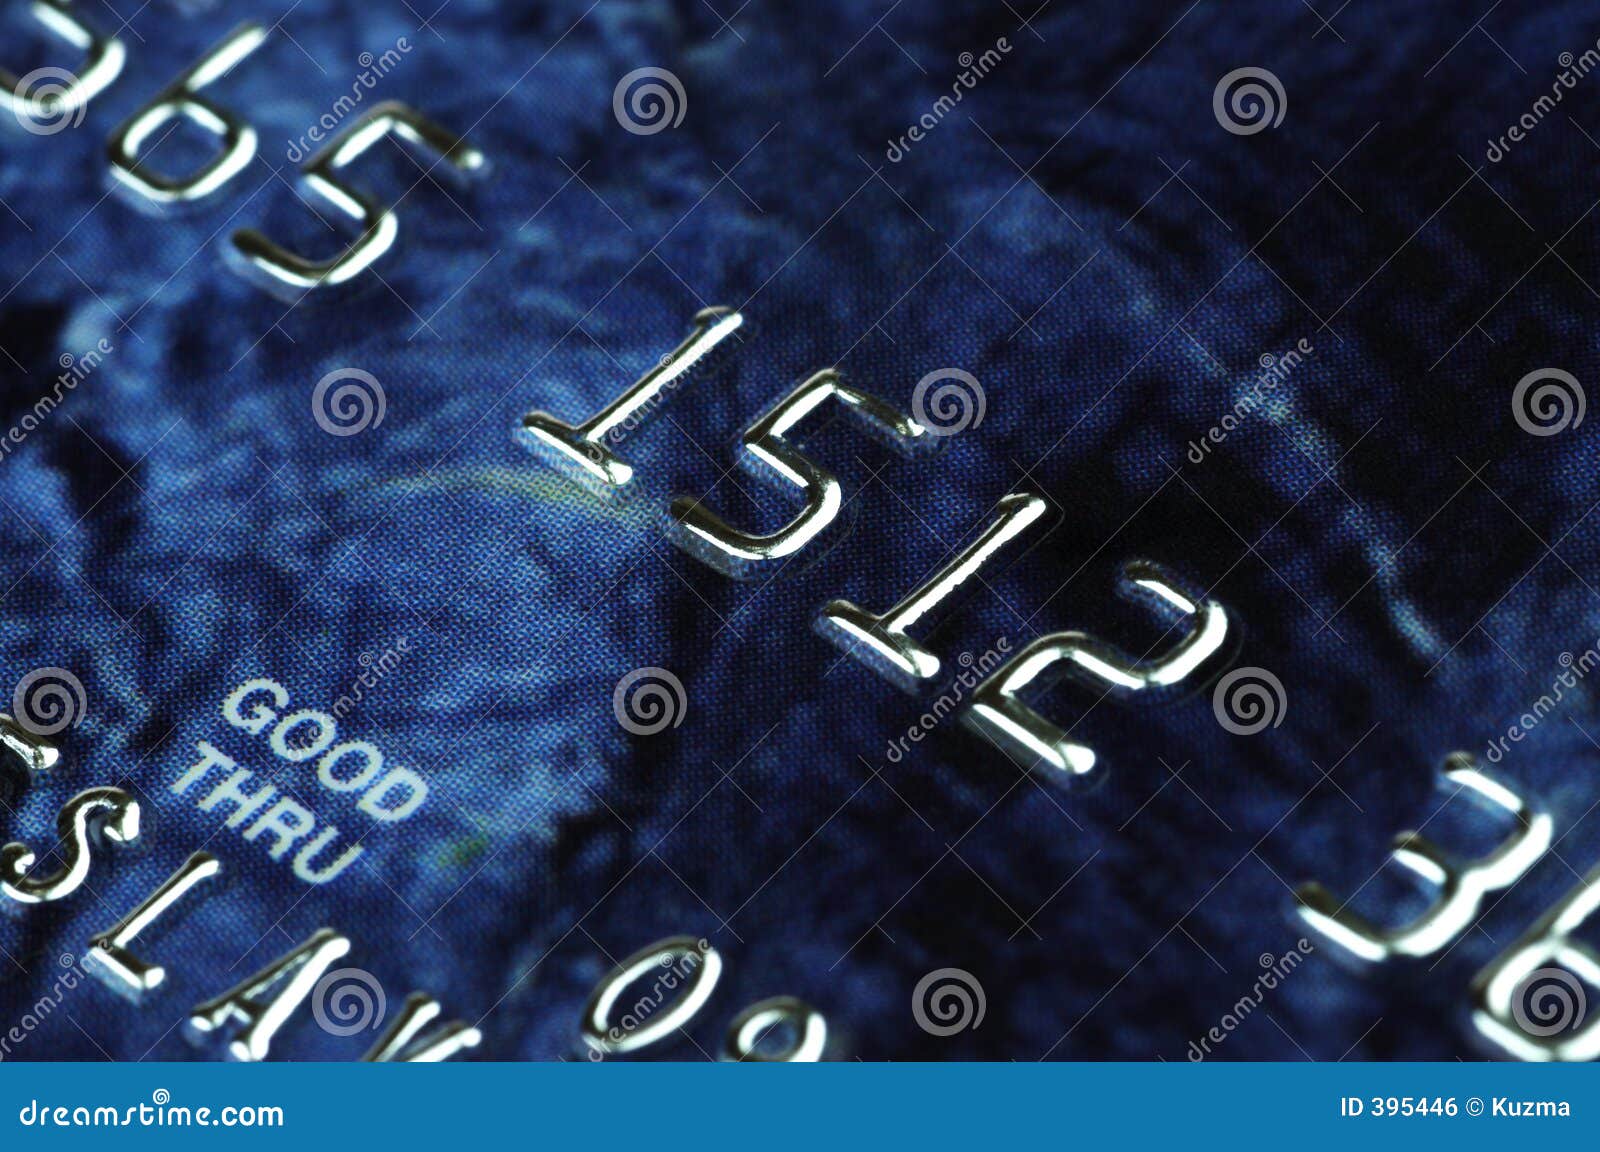 banking card in macro